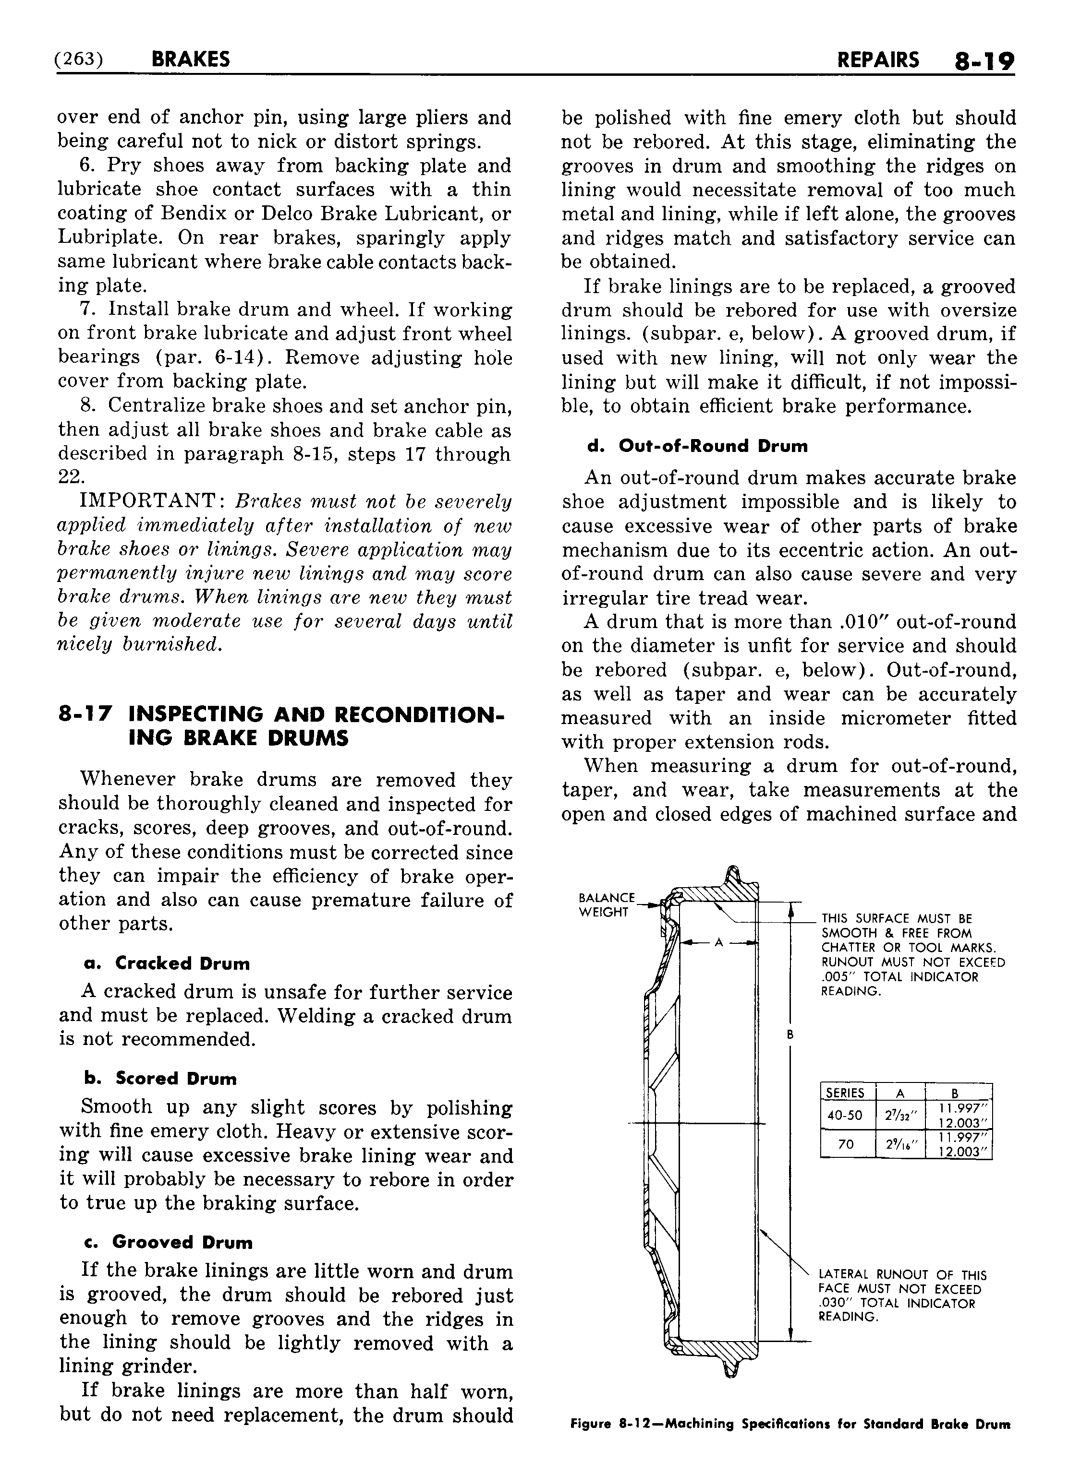 n_09 1948 Buick Shop Manual - Brakes-019-019.jpg